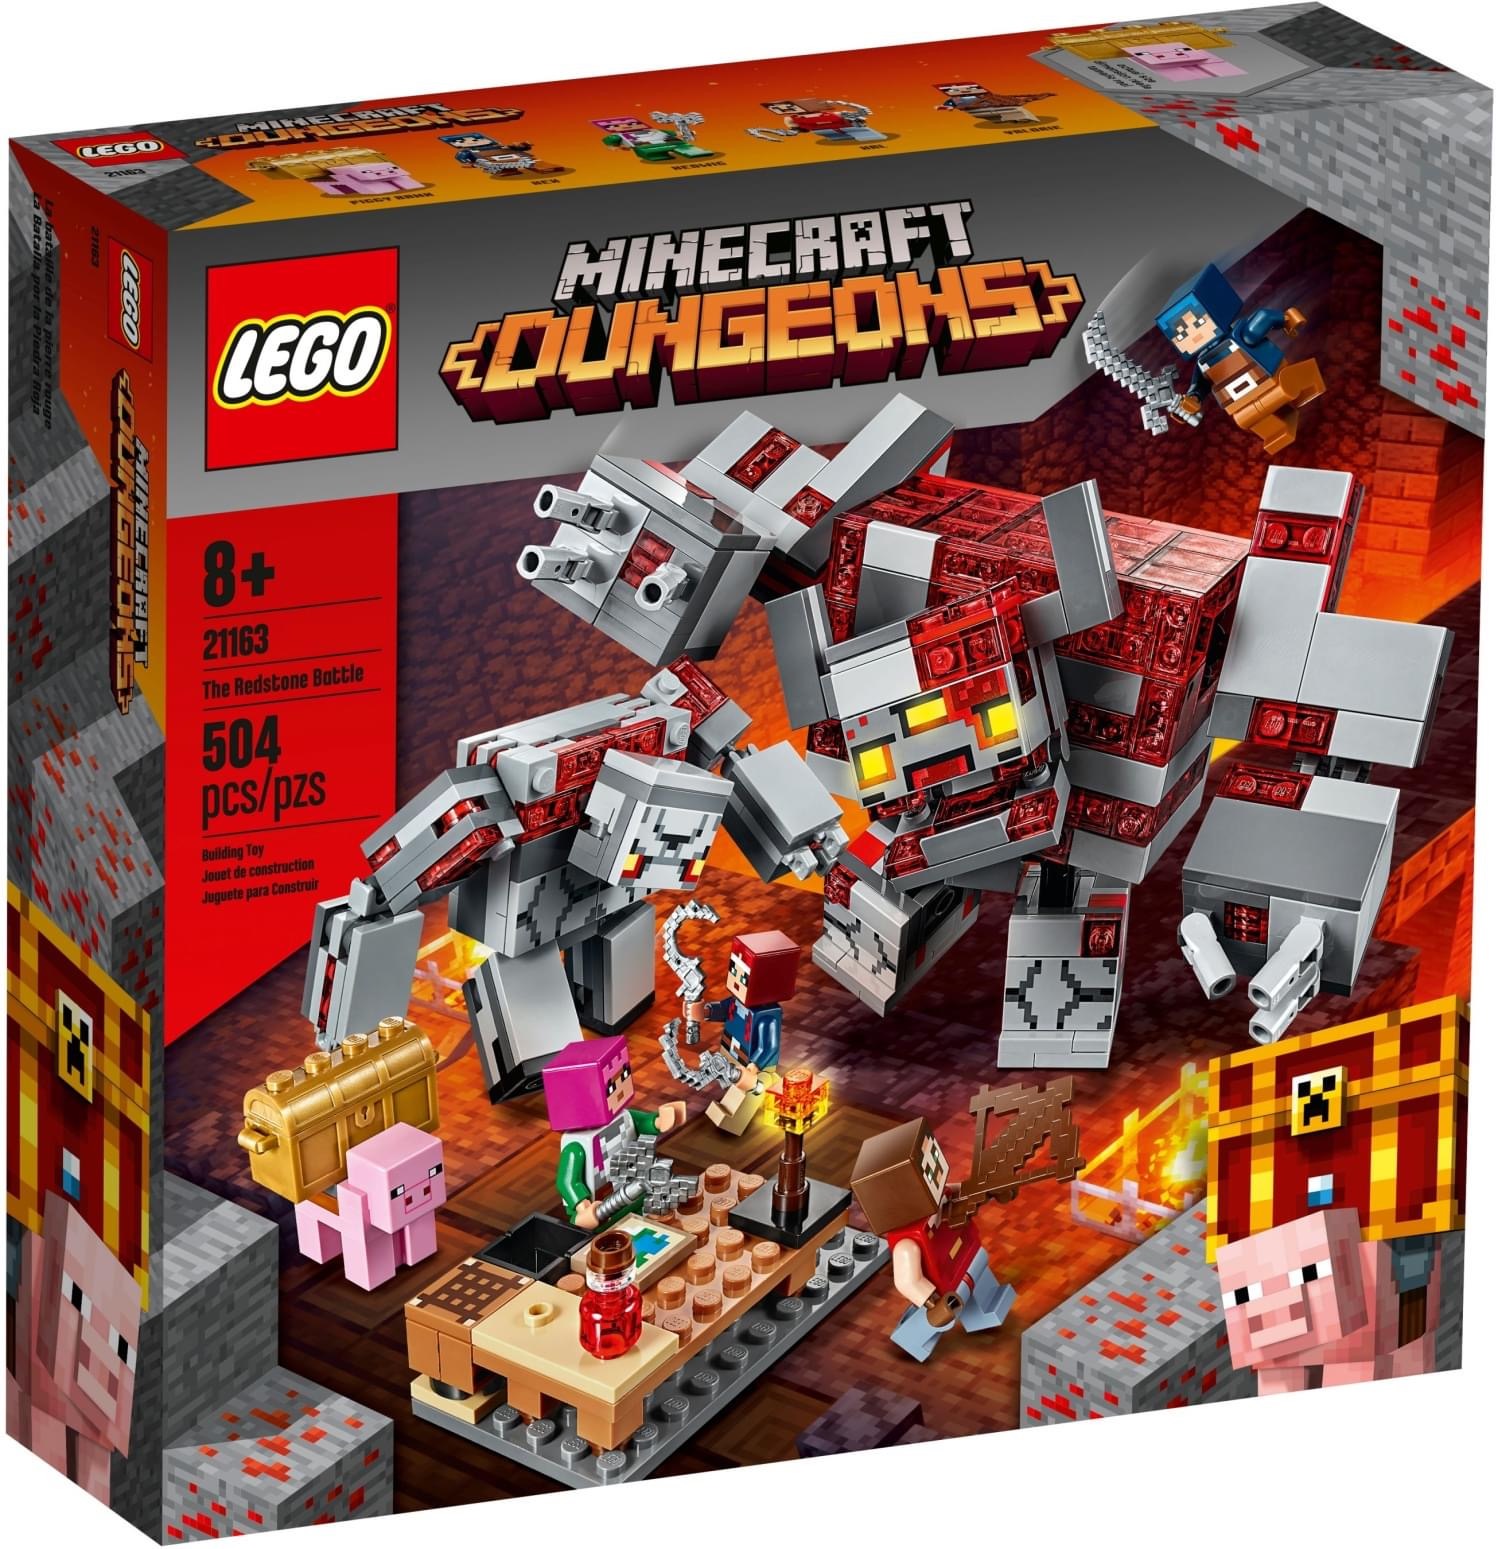 Brick Built Blogs: Lego Minecraft 2020 Box Images Revealed